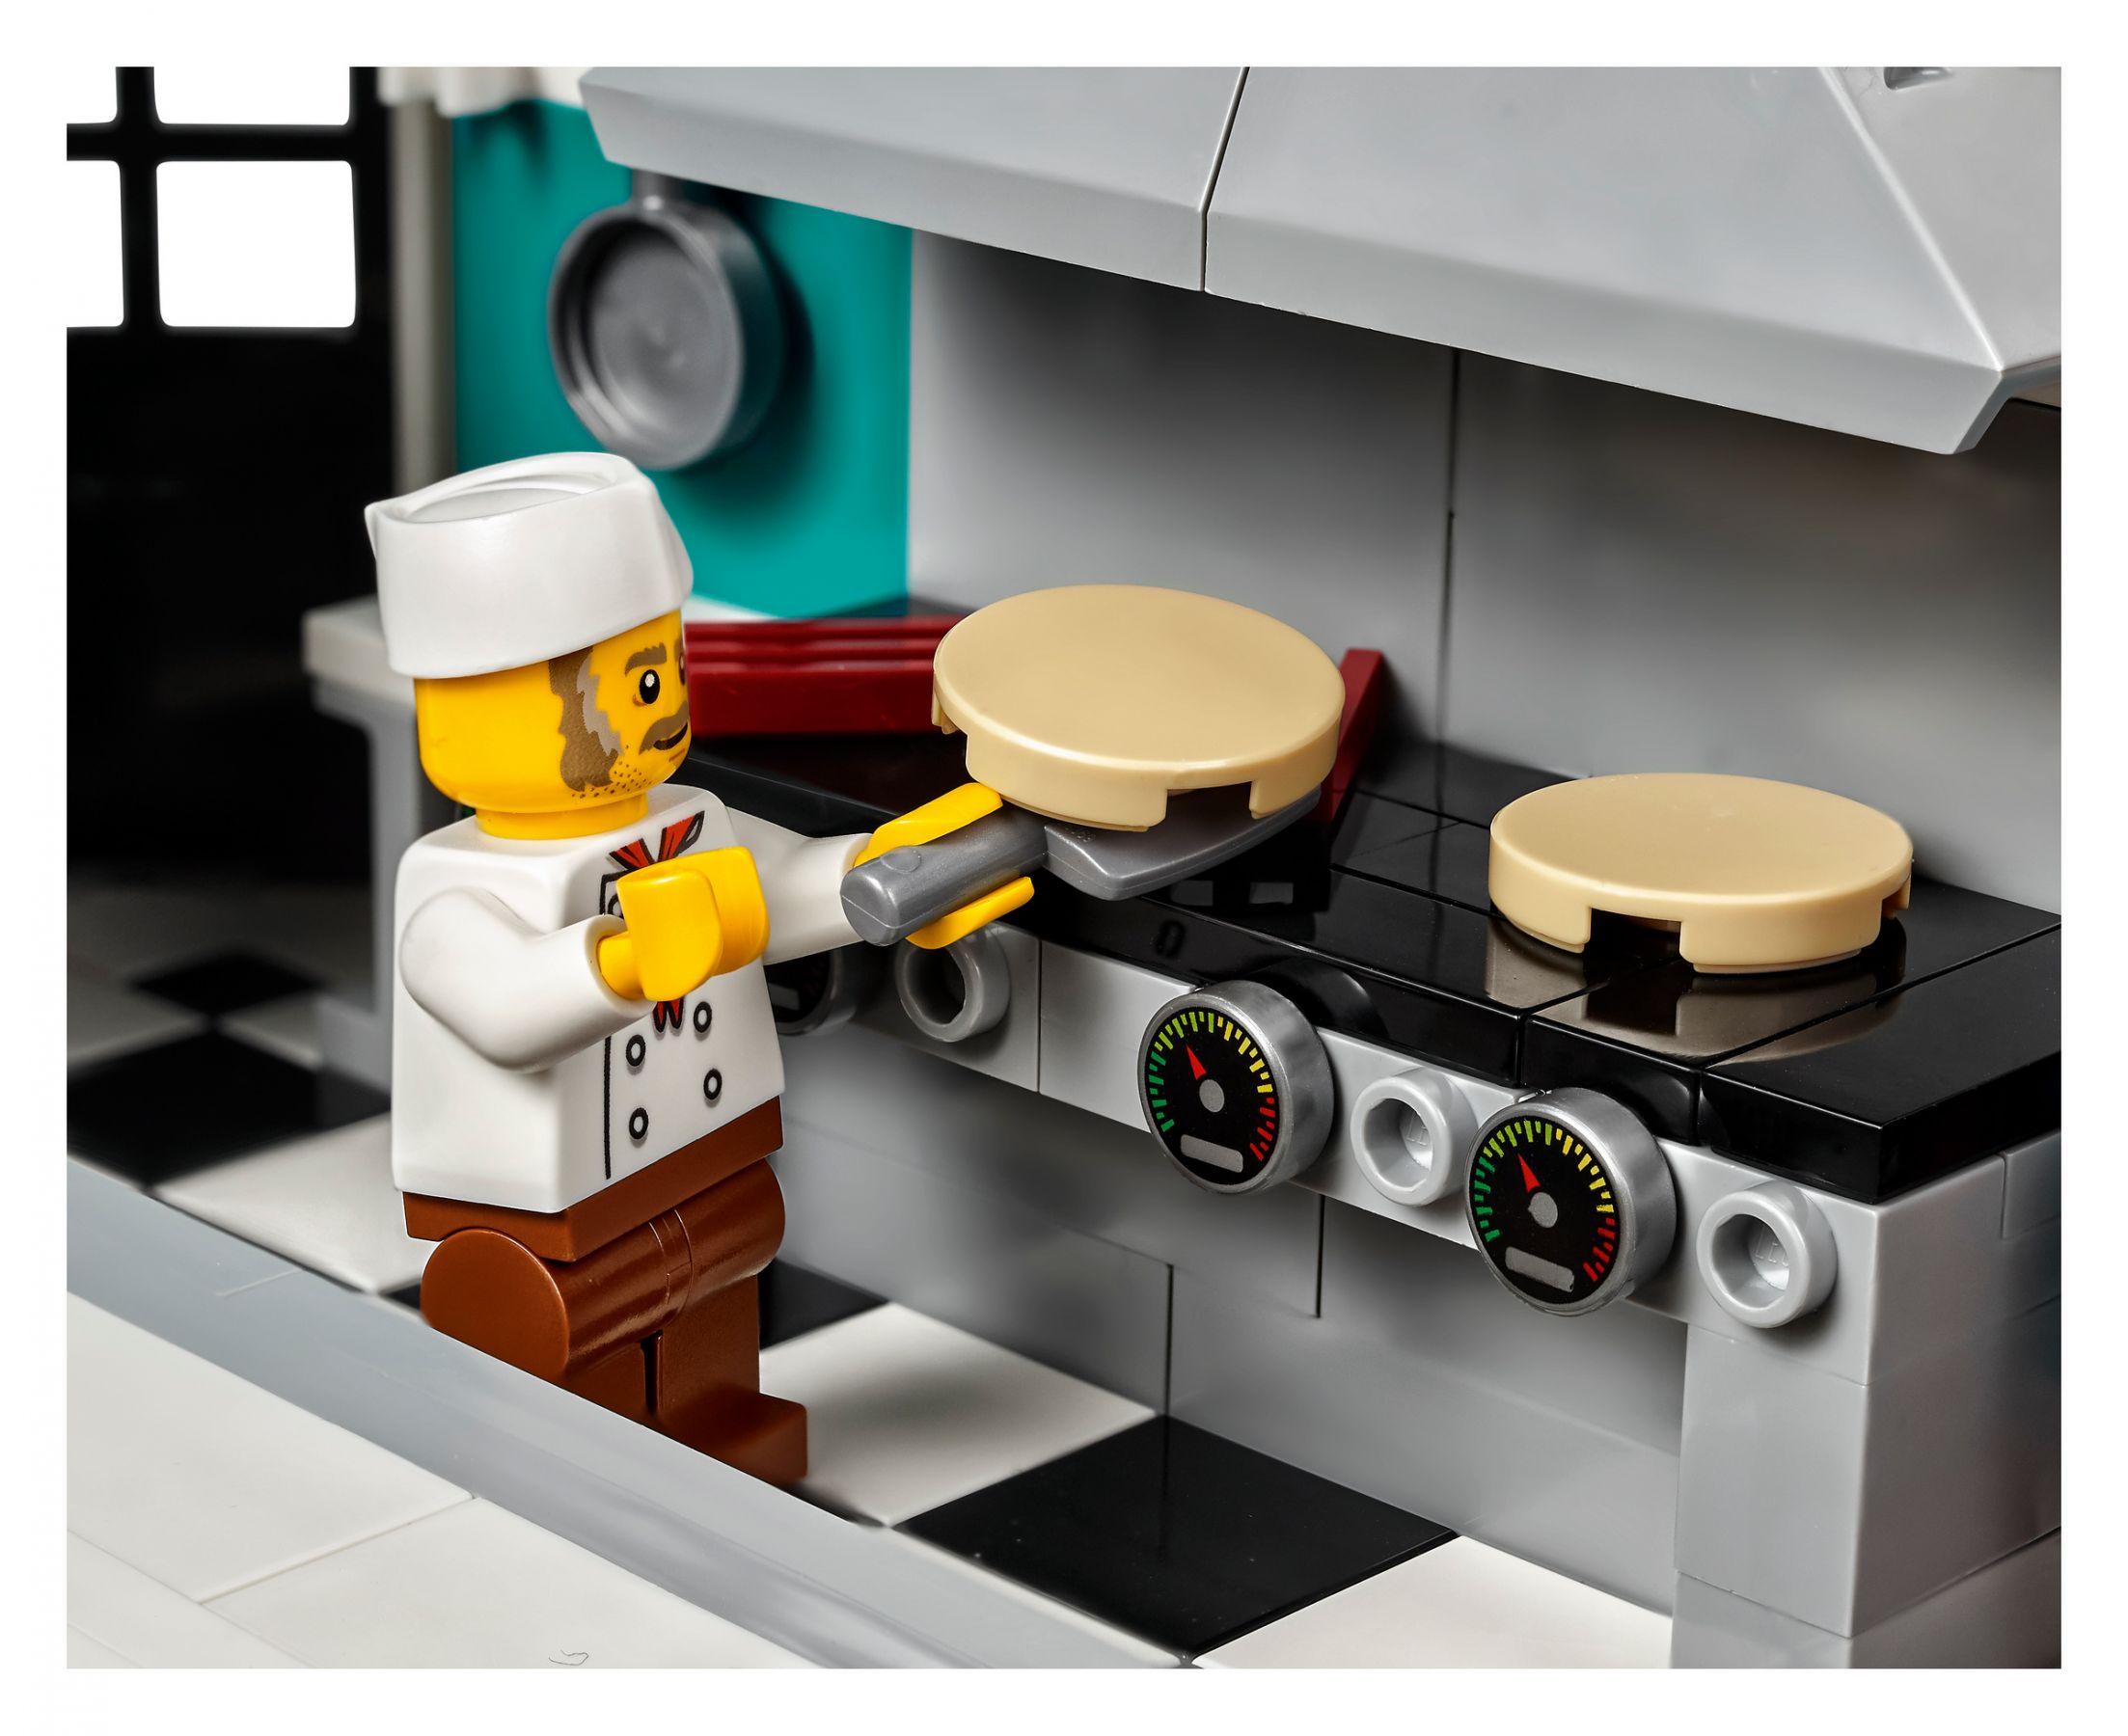 LEGO Advanced Models 10260 Amerikanisches Diner LEGO_10260_alt12.jpg